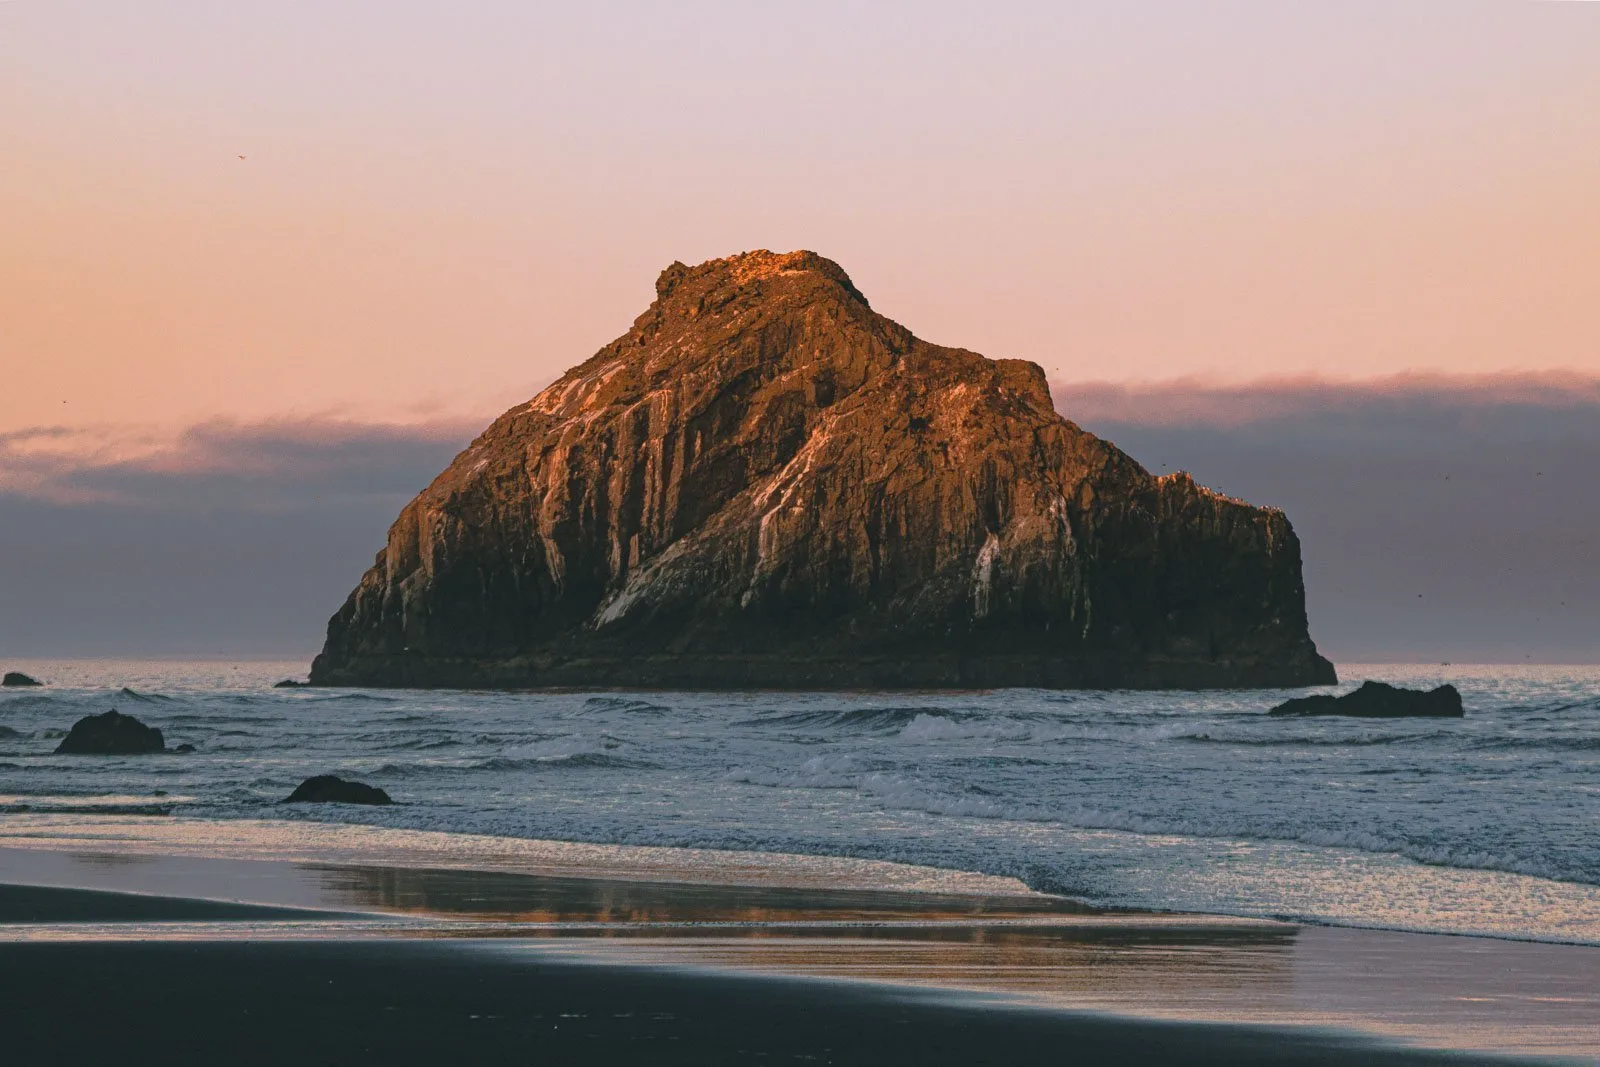 Bandon Beach rock formation on an Oregon coast road trip